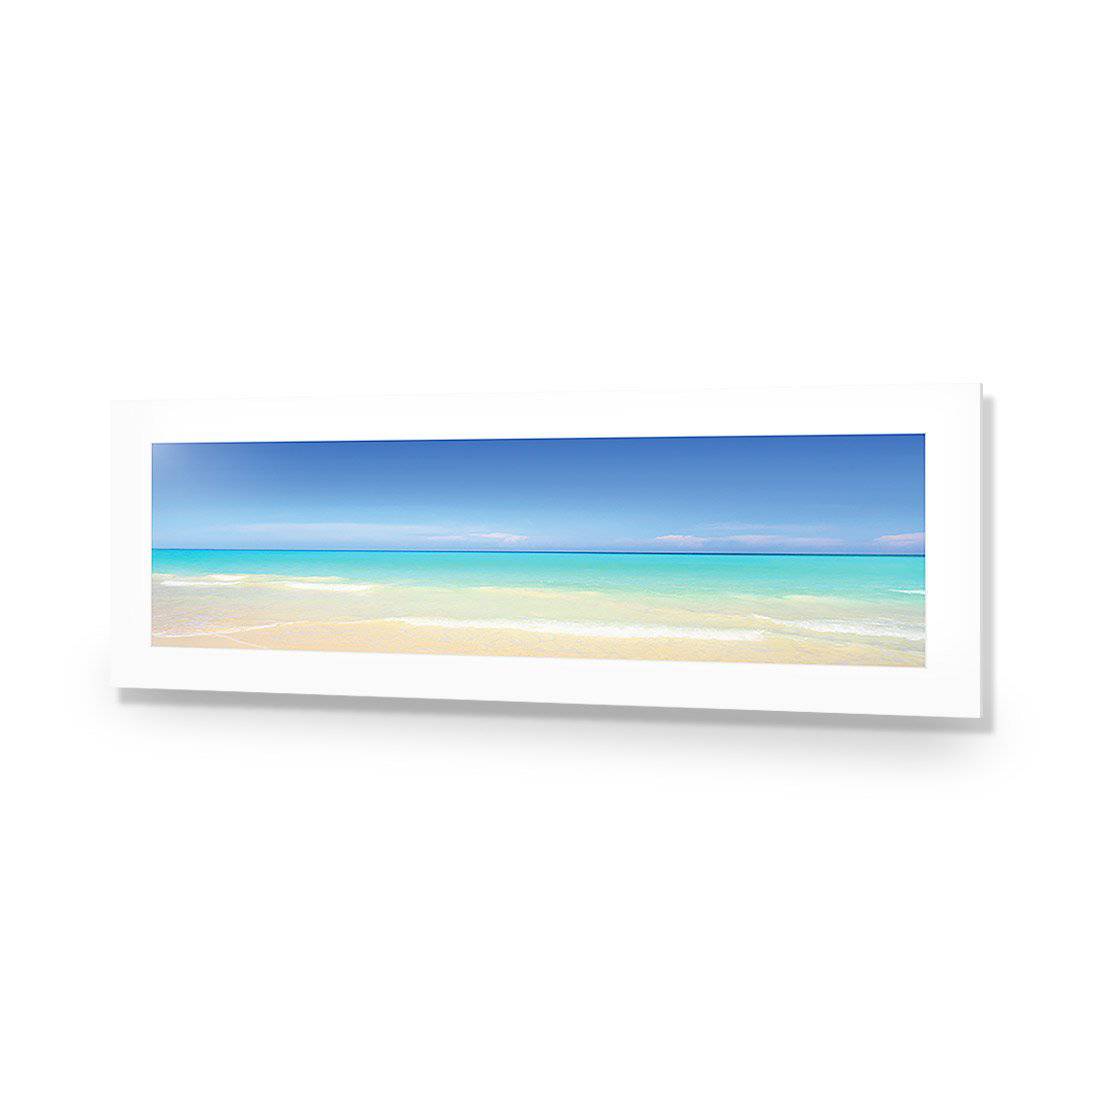 Paradise Beach, Long-Acrylic-Wall Art Design-With Border-Acrylic - No Frame-60x20cm-Wall Art Designs